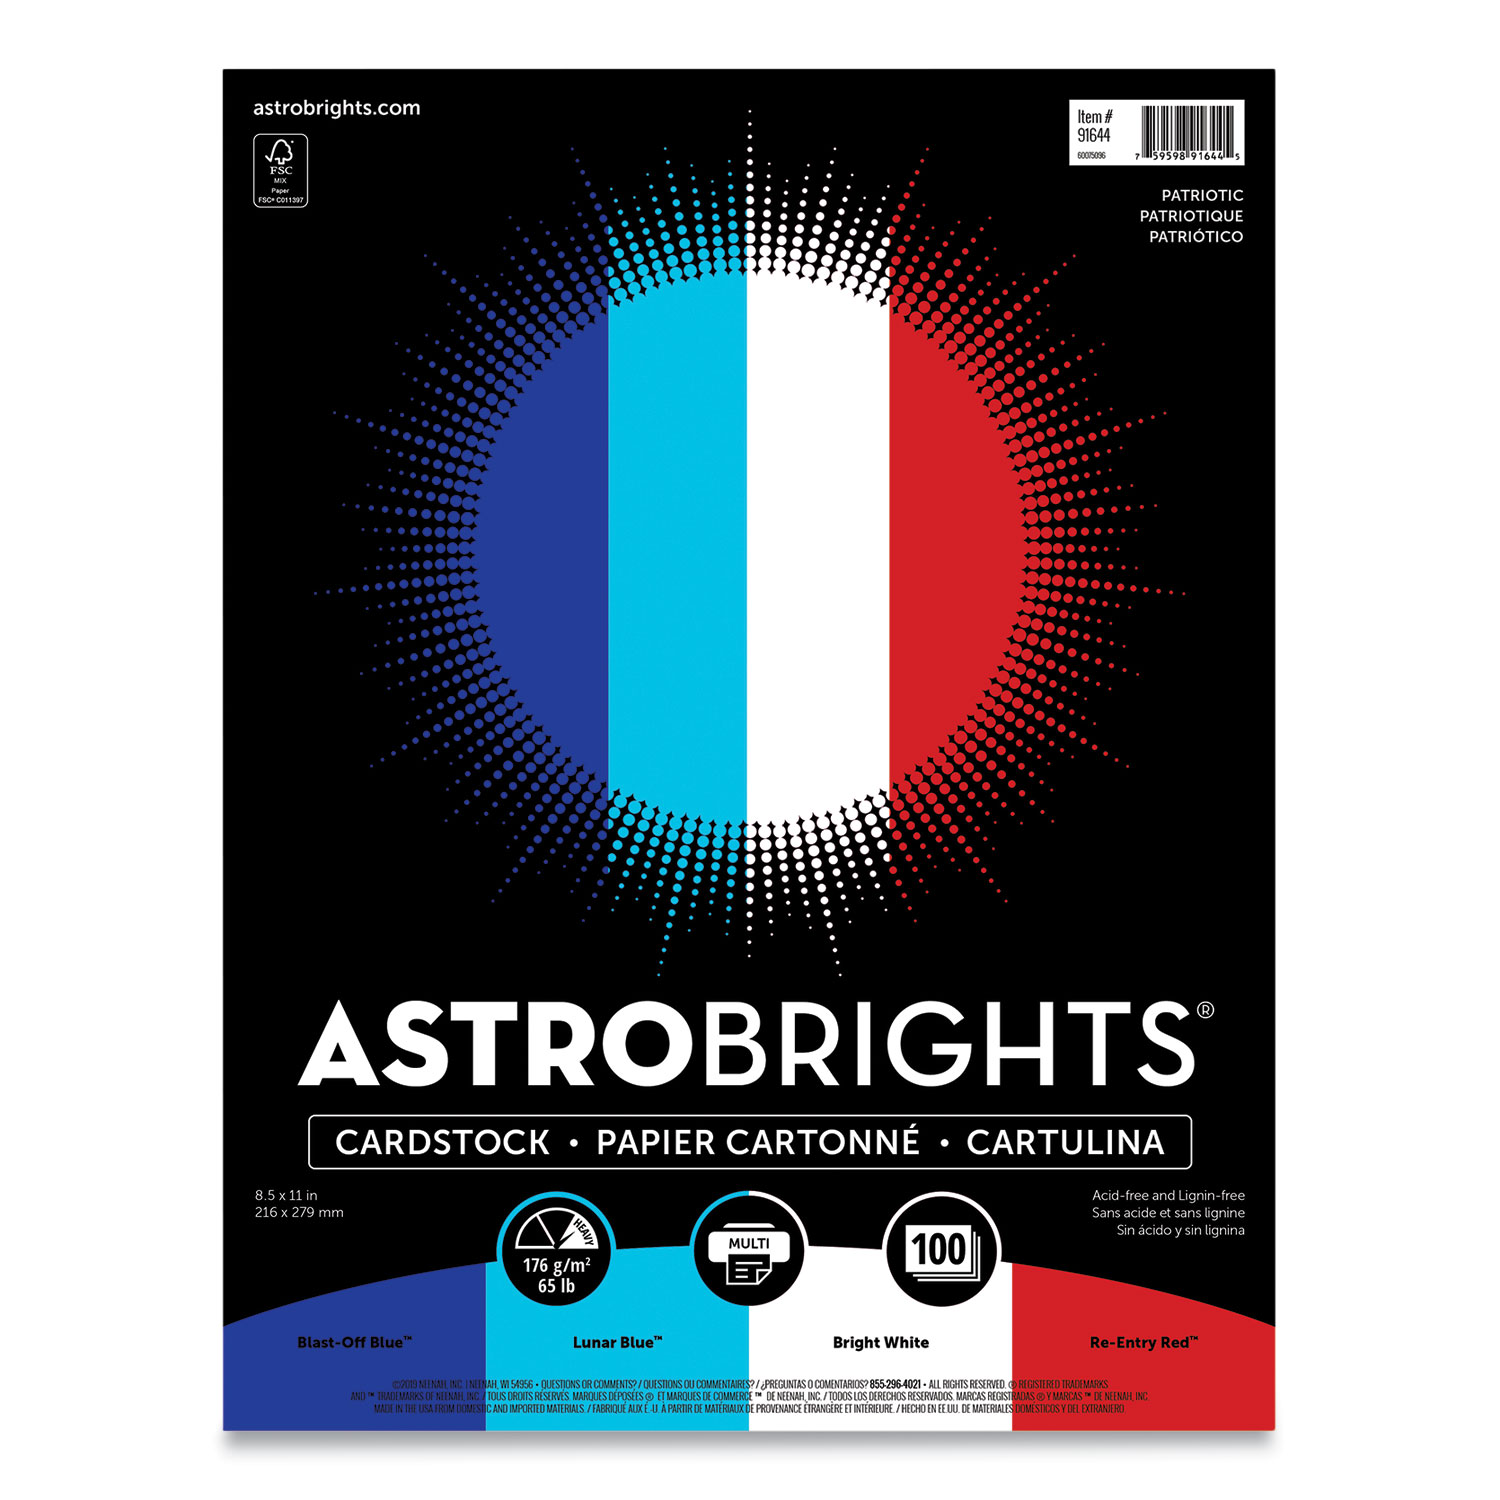  Astrobrights 91644 Color Cardstock - Patriotic Assortment, 65 lb, 8.5 x 11, Assorted Patriotic Colors, 100/Pack (WAU24396494) 